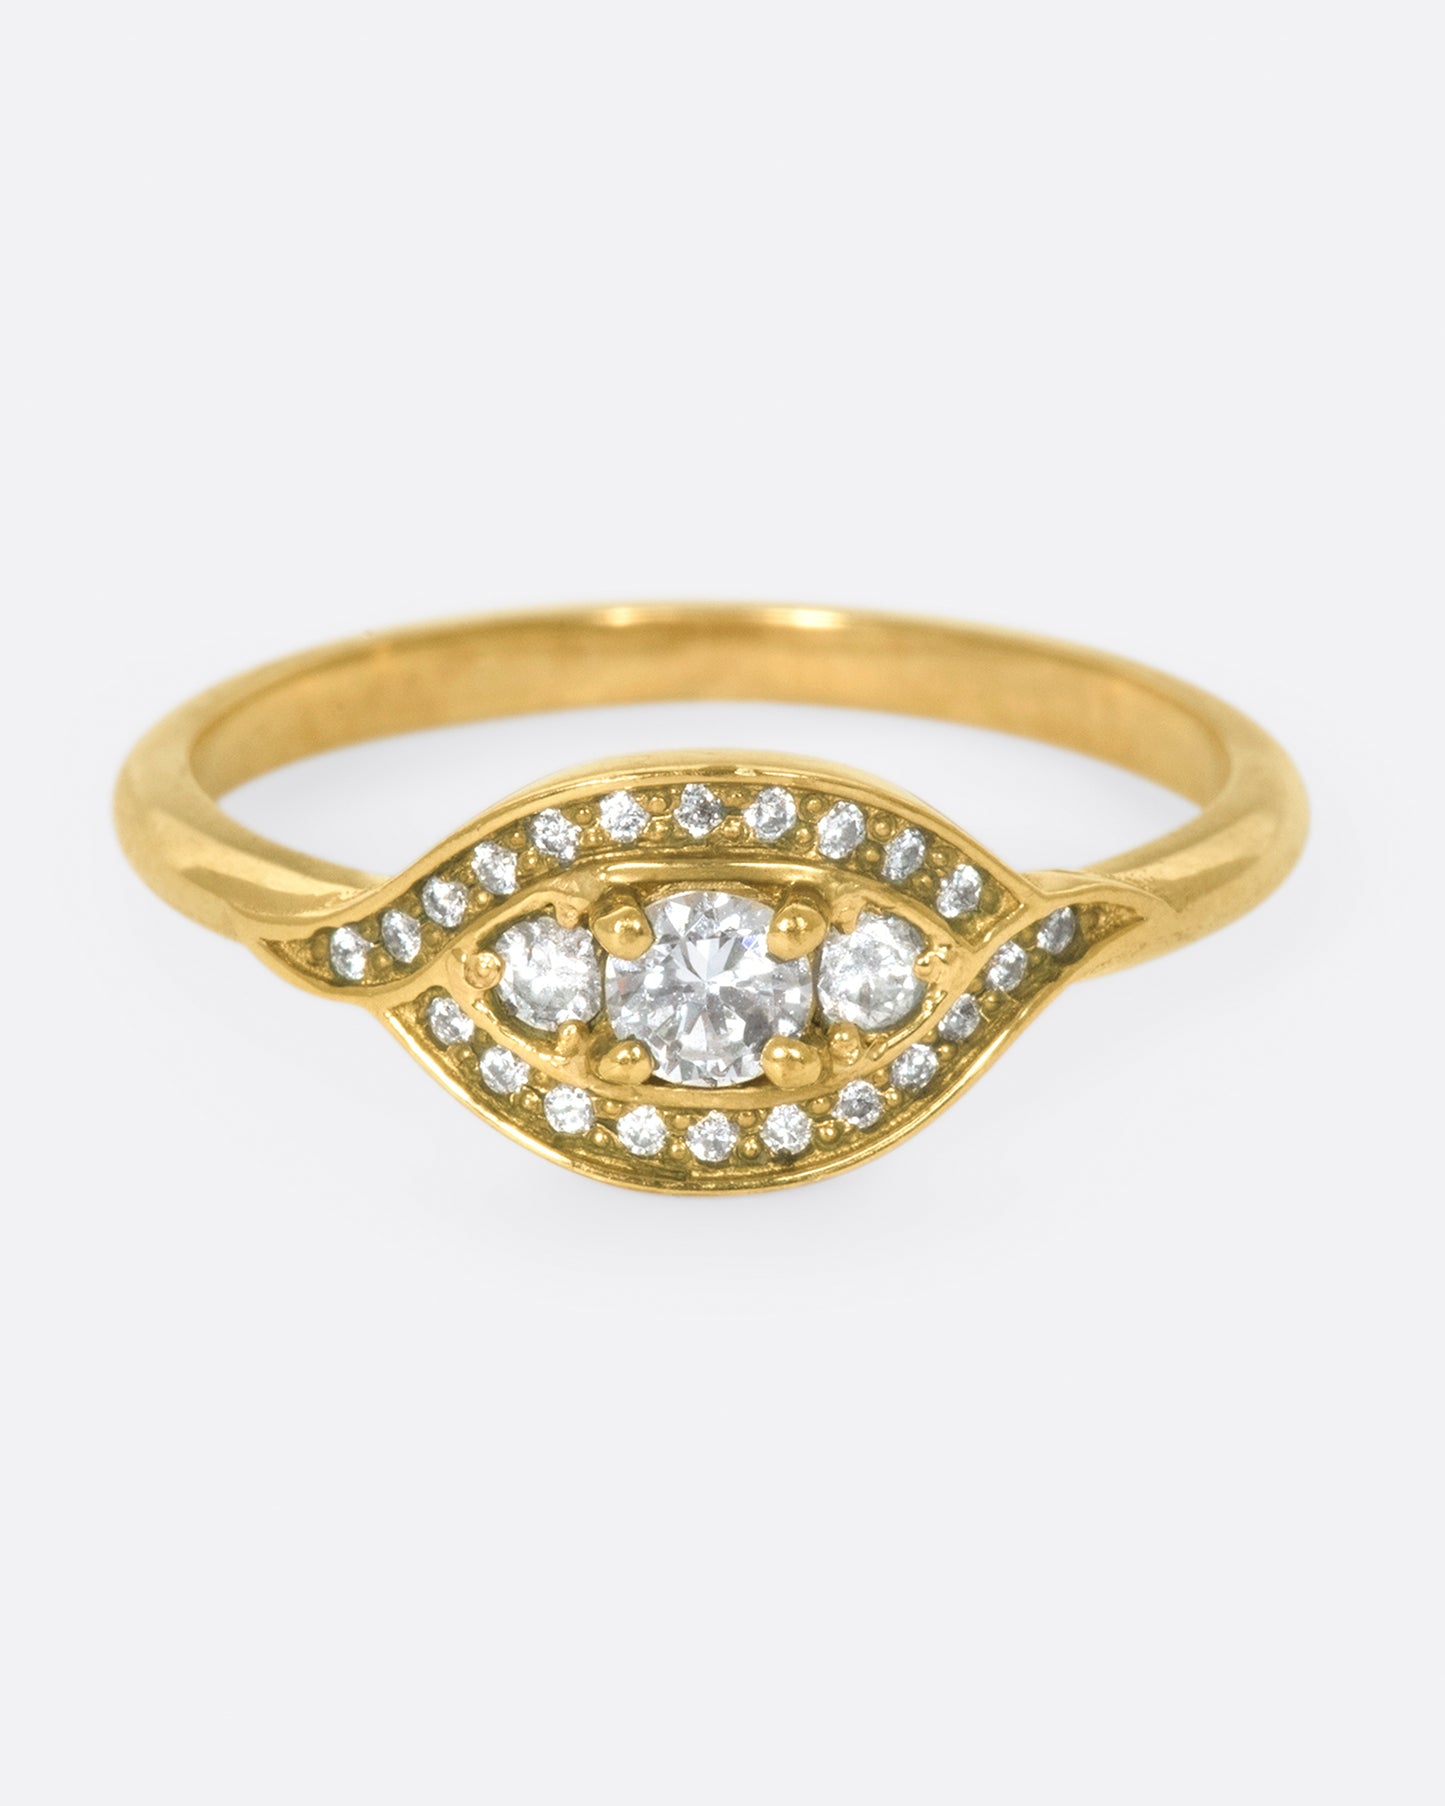 Two waves of pavé diamonds surround three rose cut white diamonds on this low profile ring